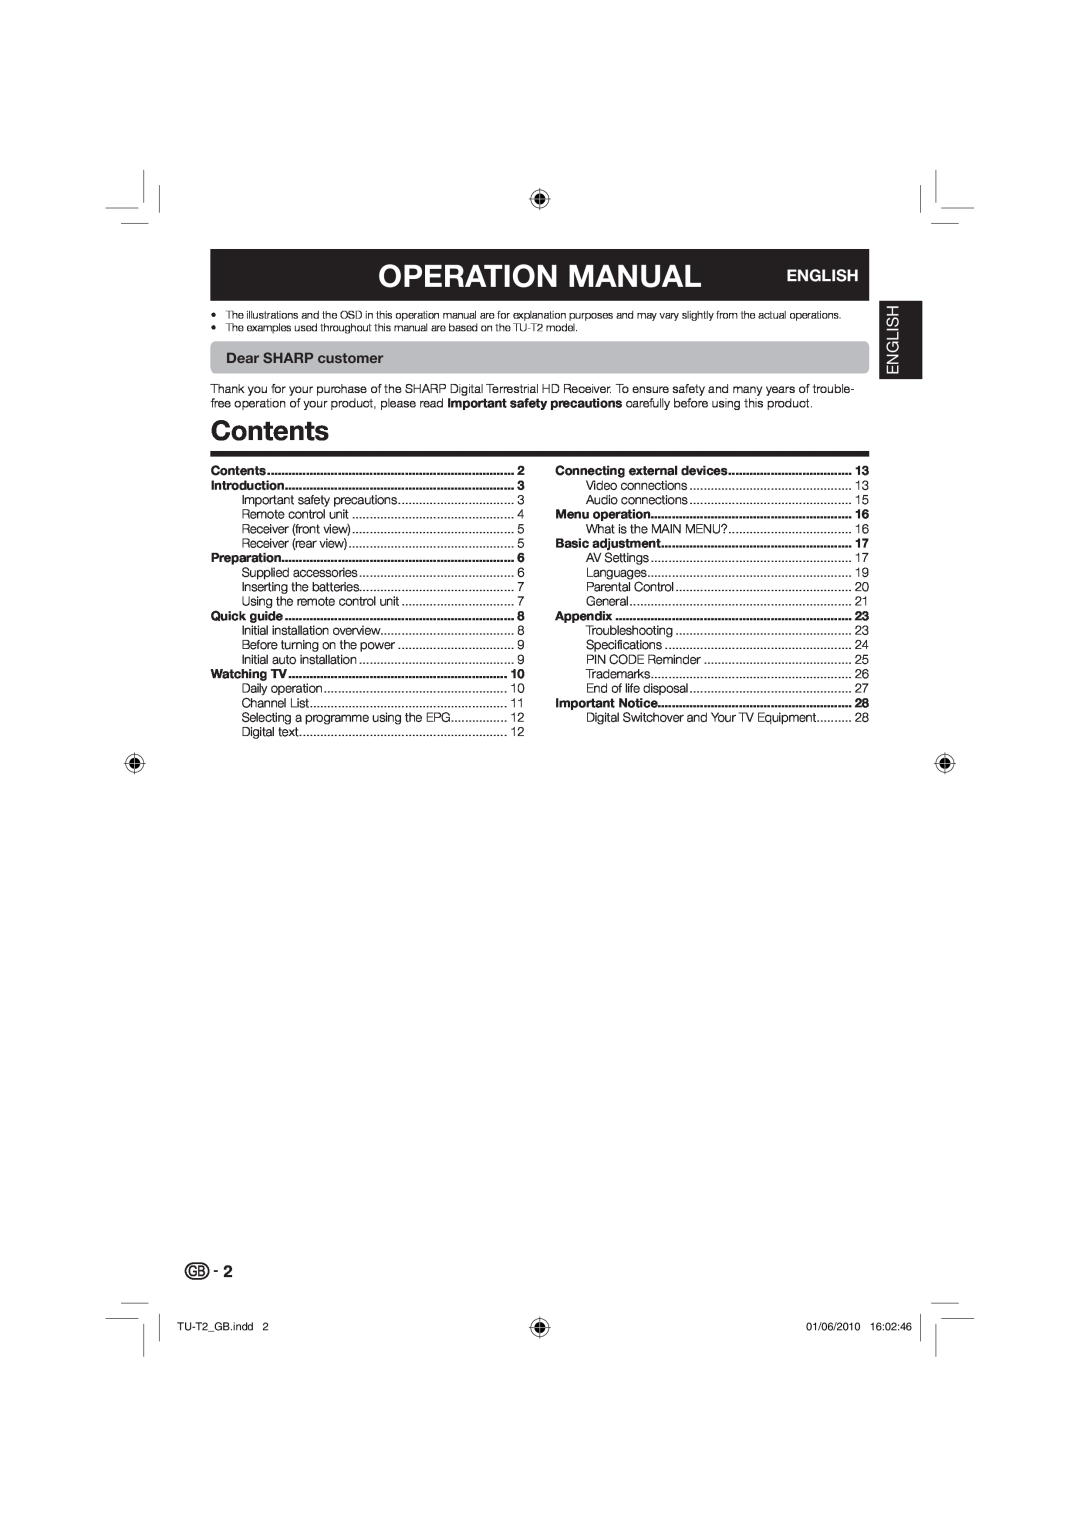 Sharp TU-T2 operation manual Contents, Dear SHARP customer, Operation Manual, English 